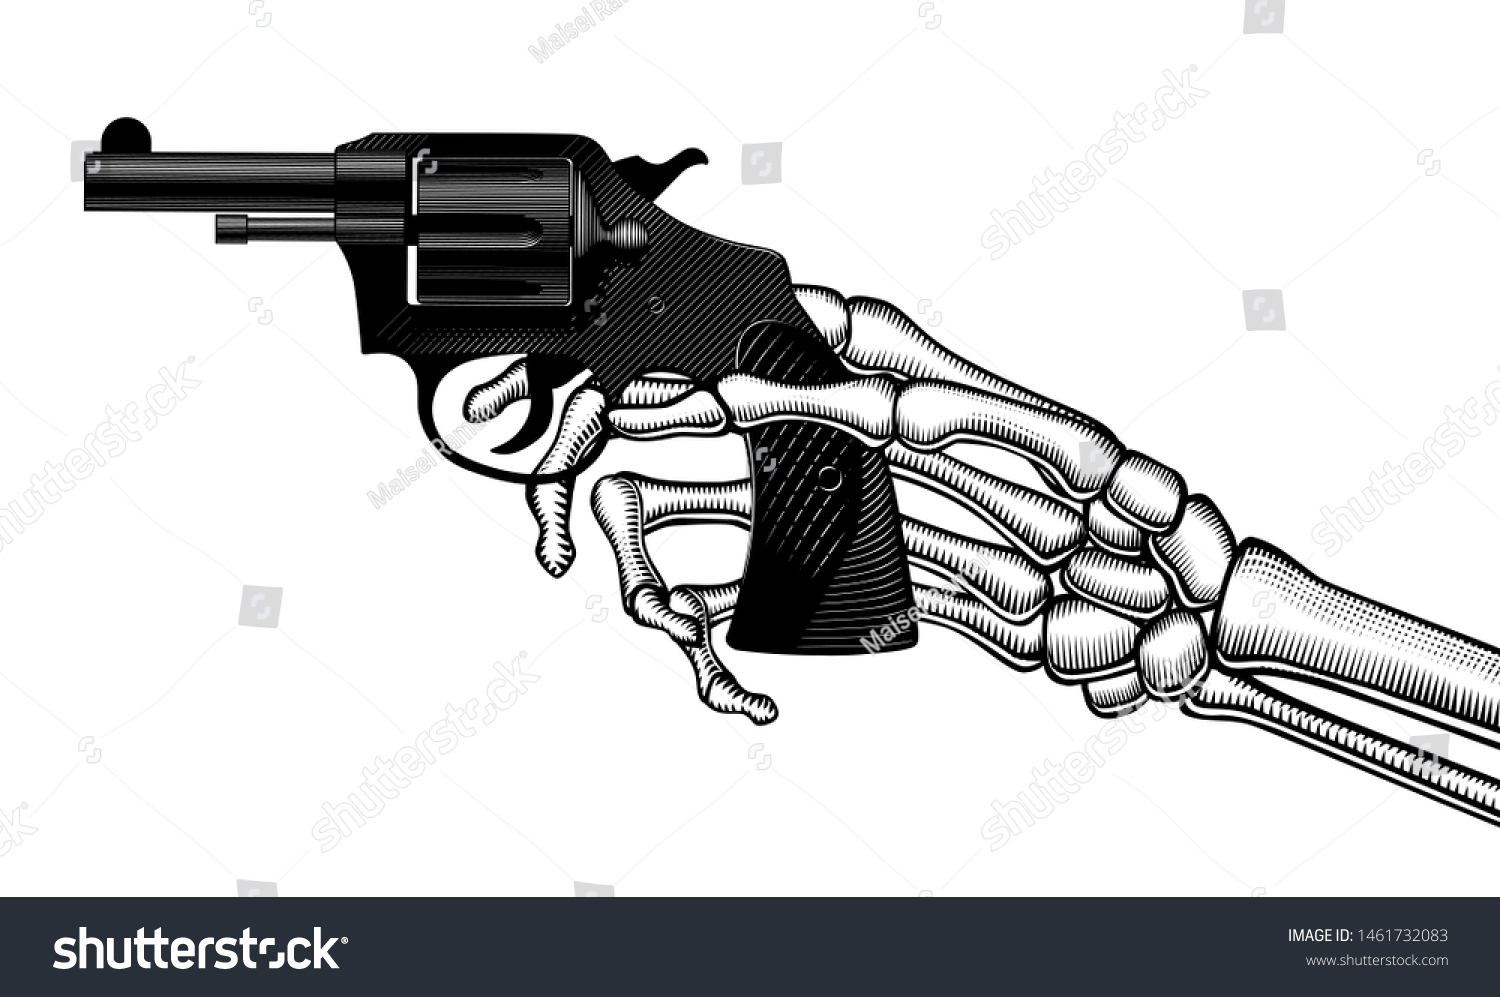 Skeleton Hand Holding Gun Vintage Engraving ภาพประกอบสต็อก 1461732083